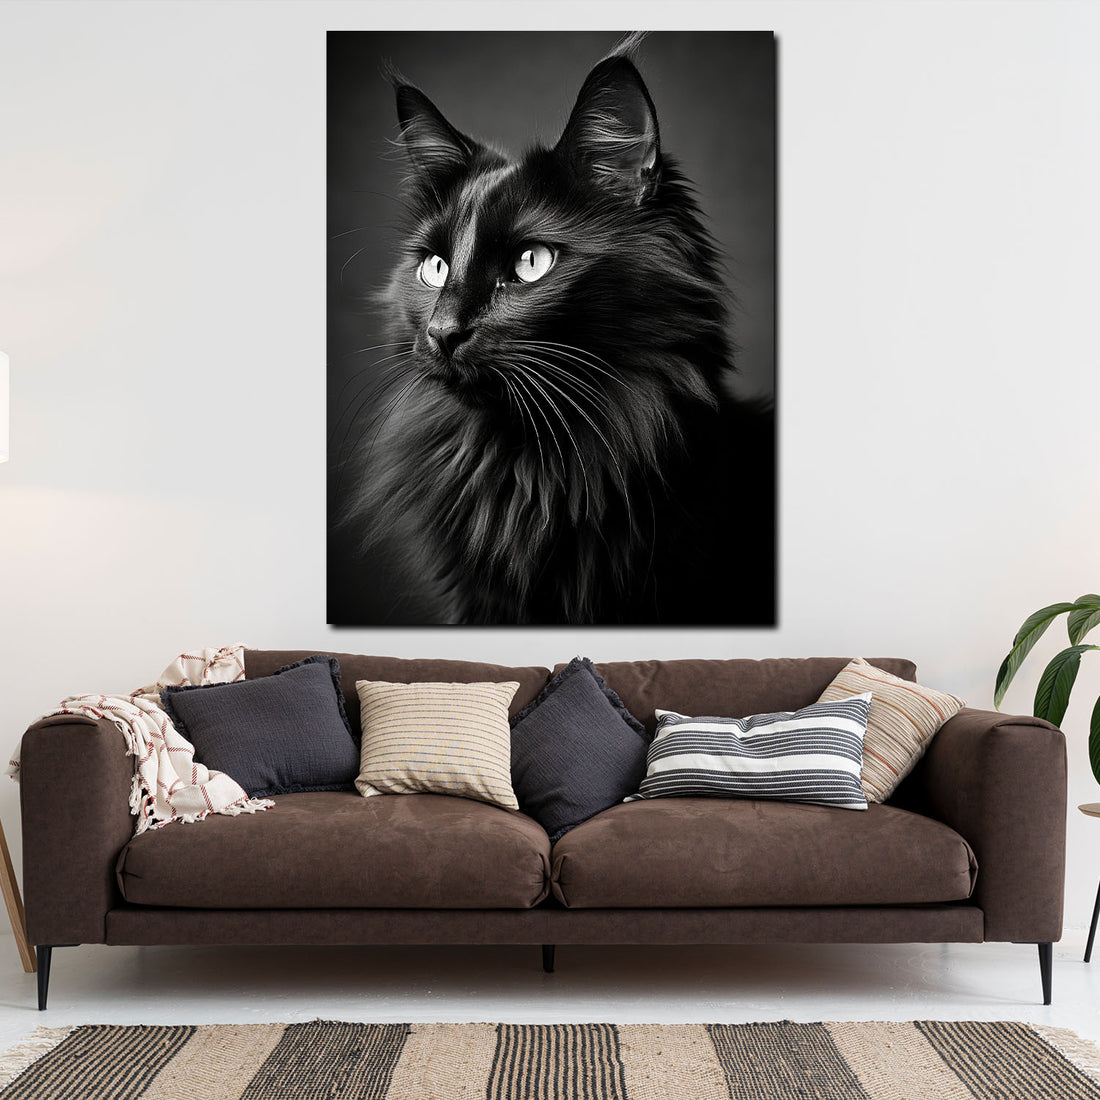 Wandbild wunderschön mit schwarze Katze